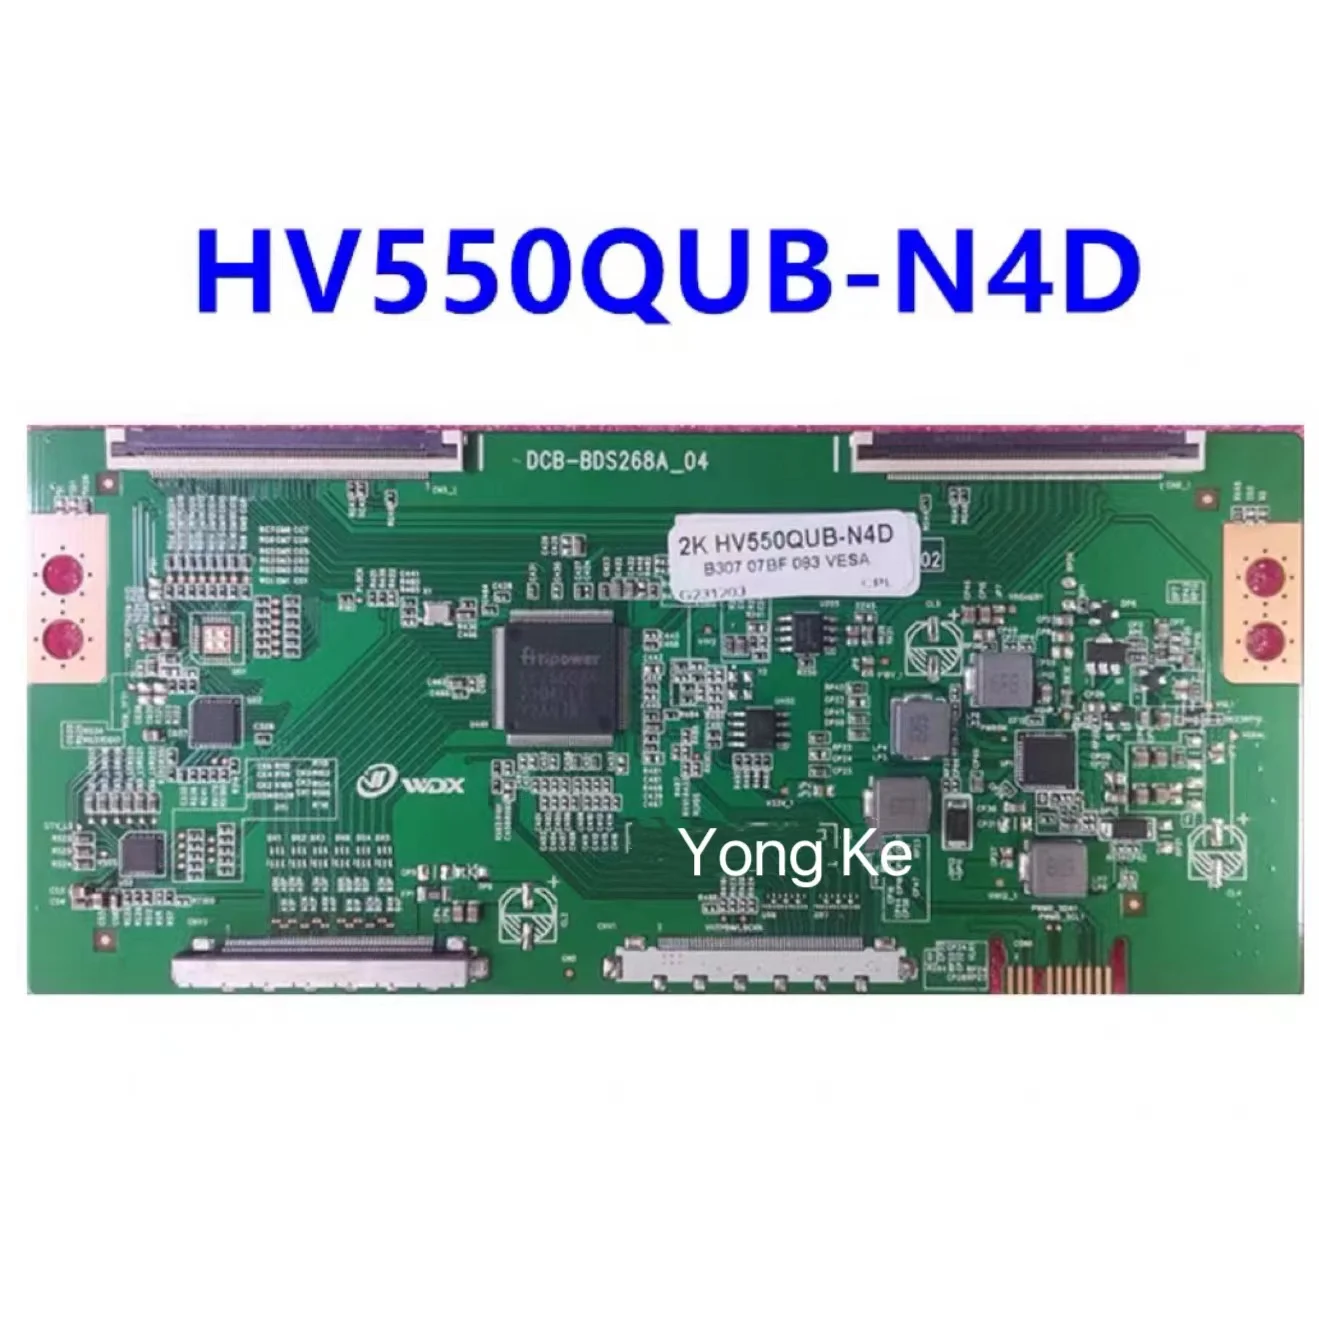 

Newly upgraded logic board DCB-BDS268A_ 04 HV550QUB-N4D 2K 4K